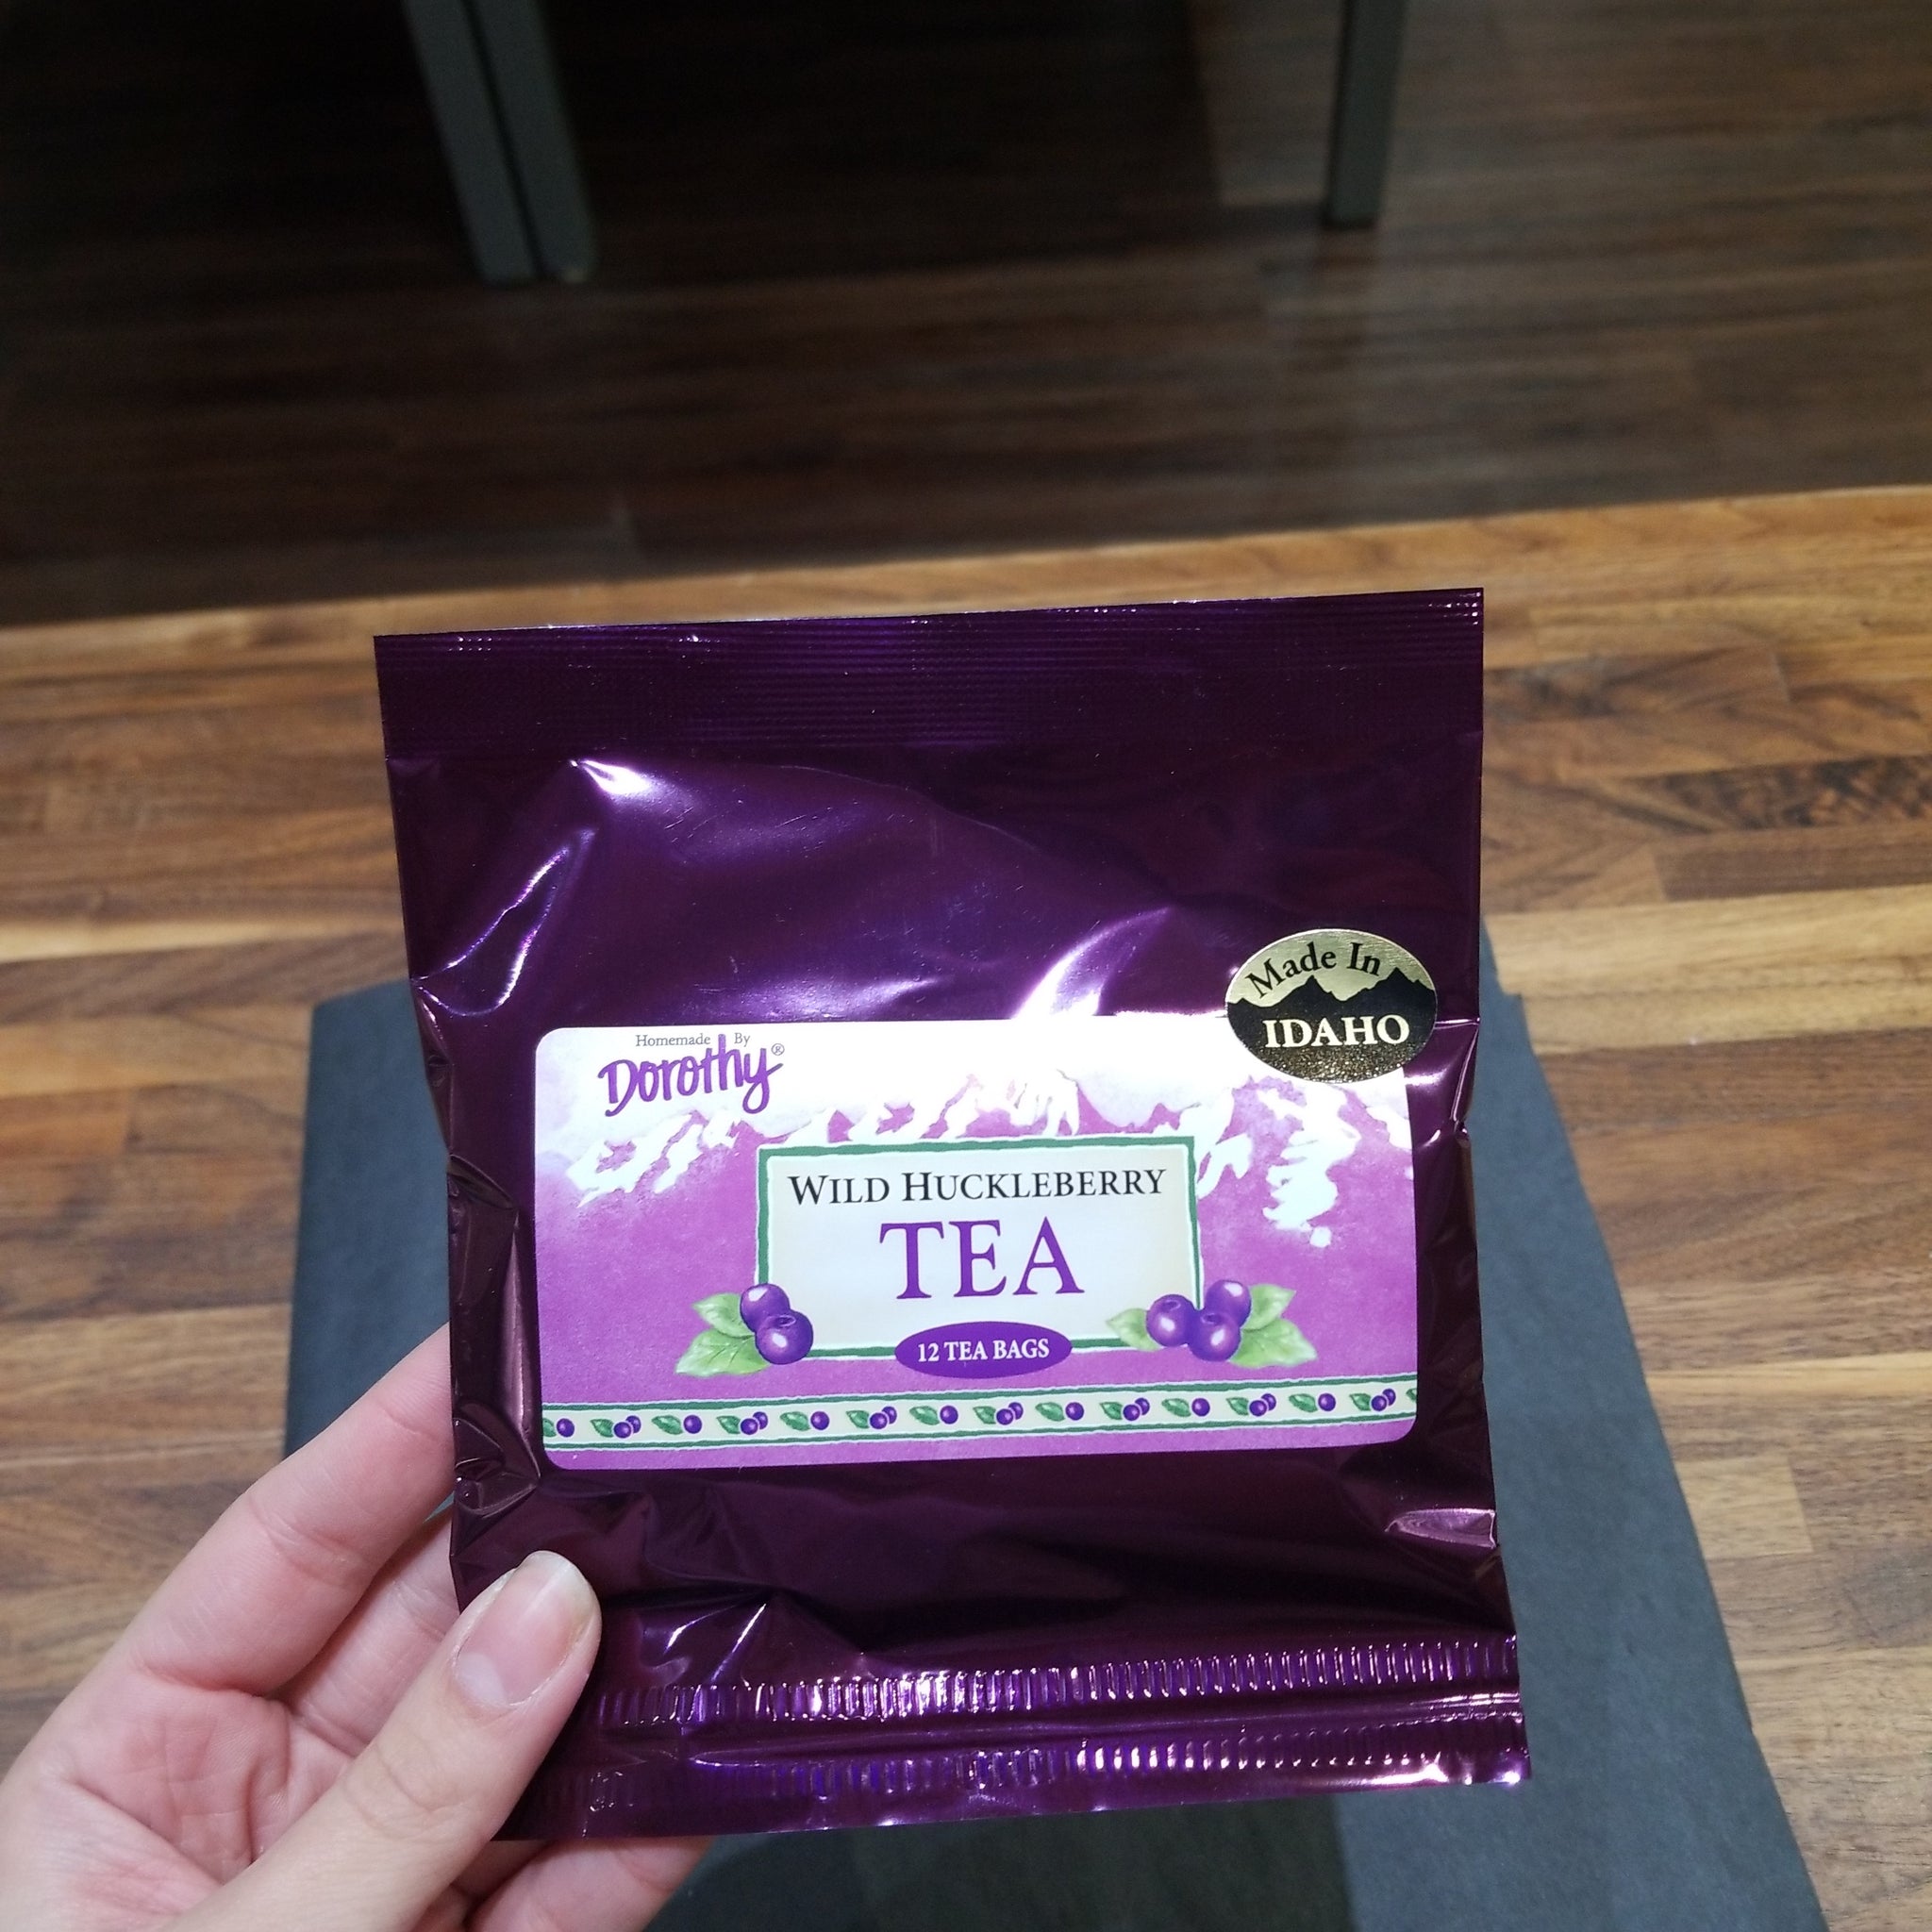 Huckleberry tea 12 tea bags